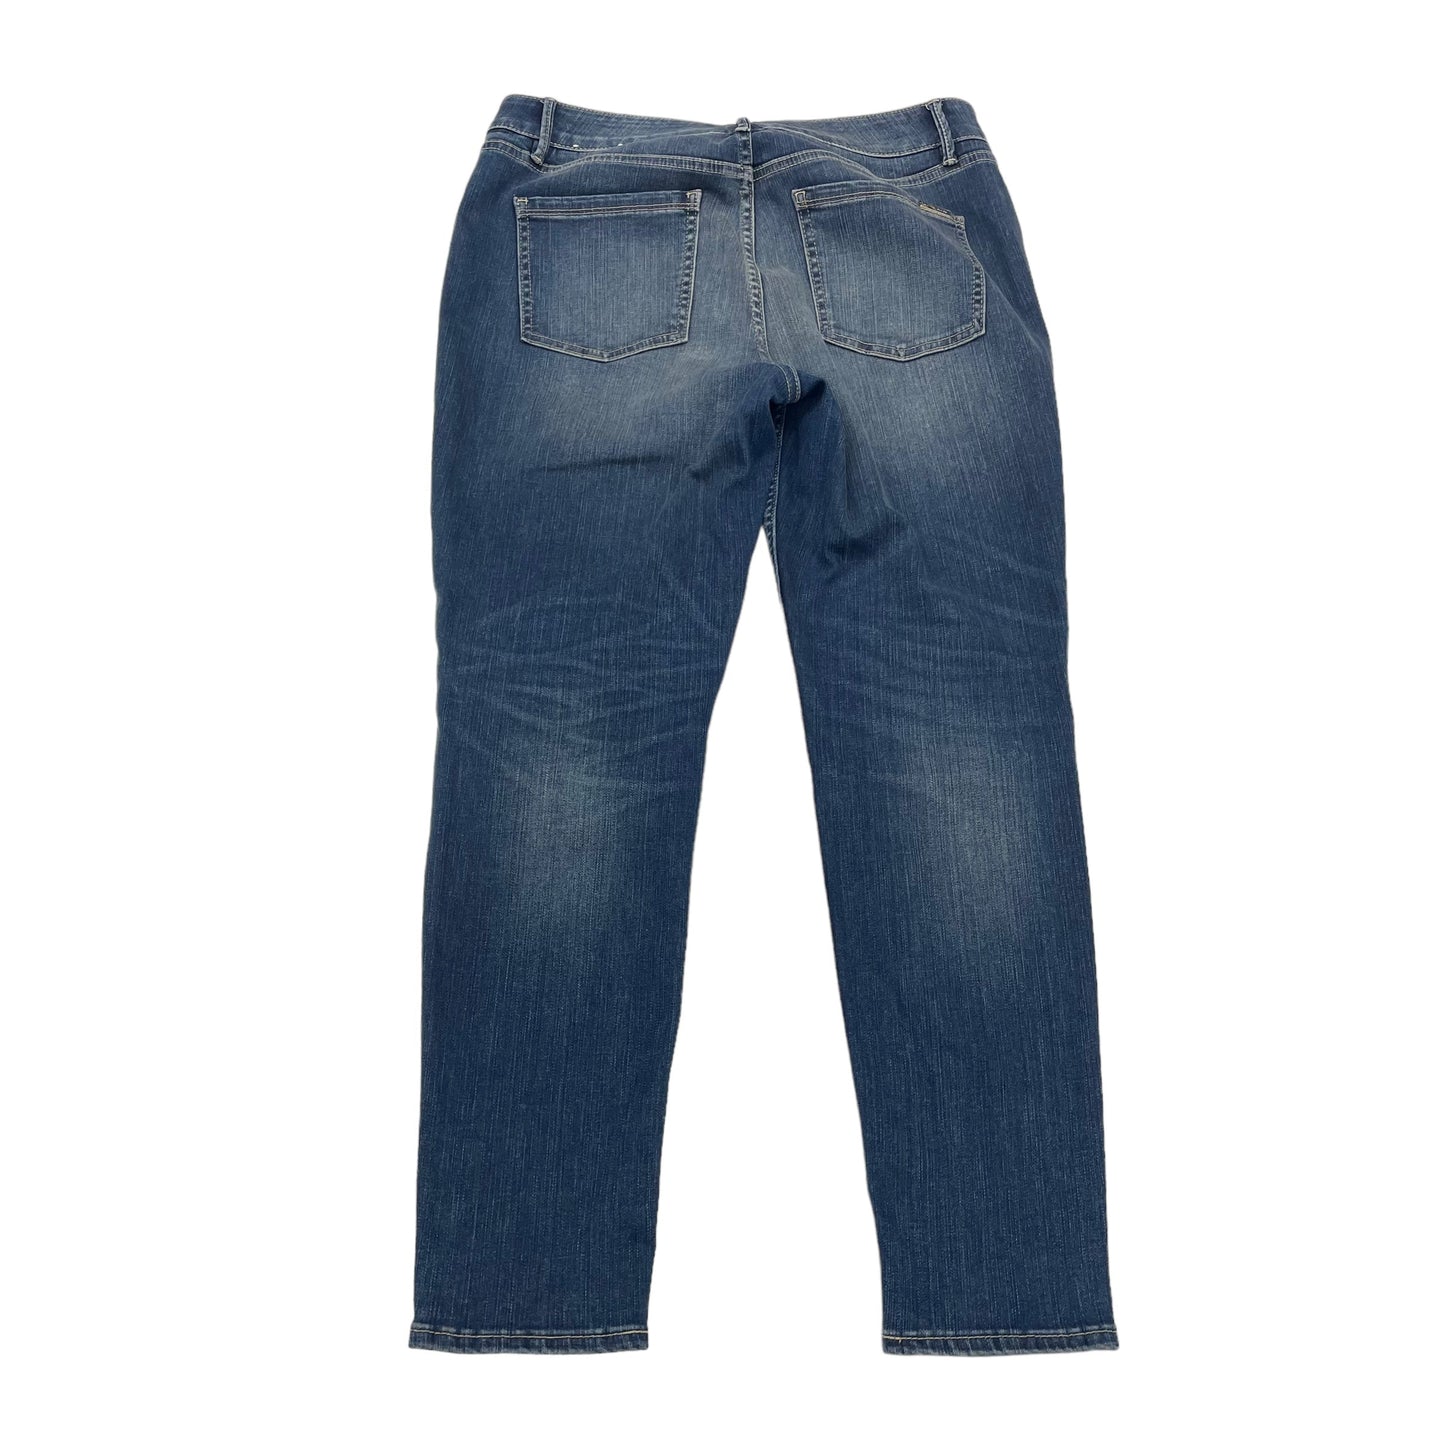 Jeans Skinny By White House Black Market  Size: 10petite